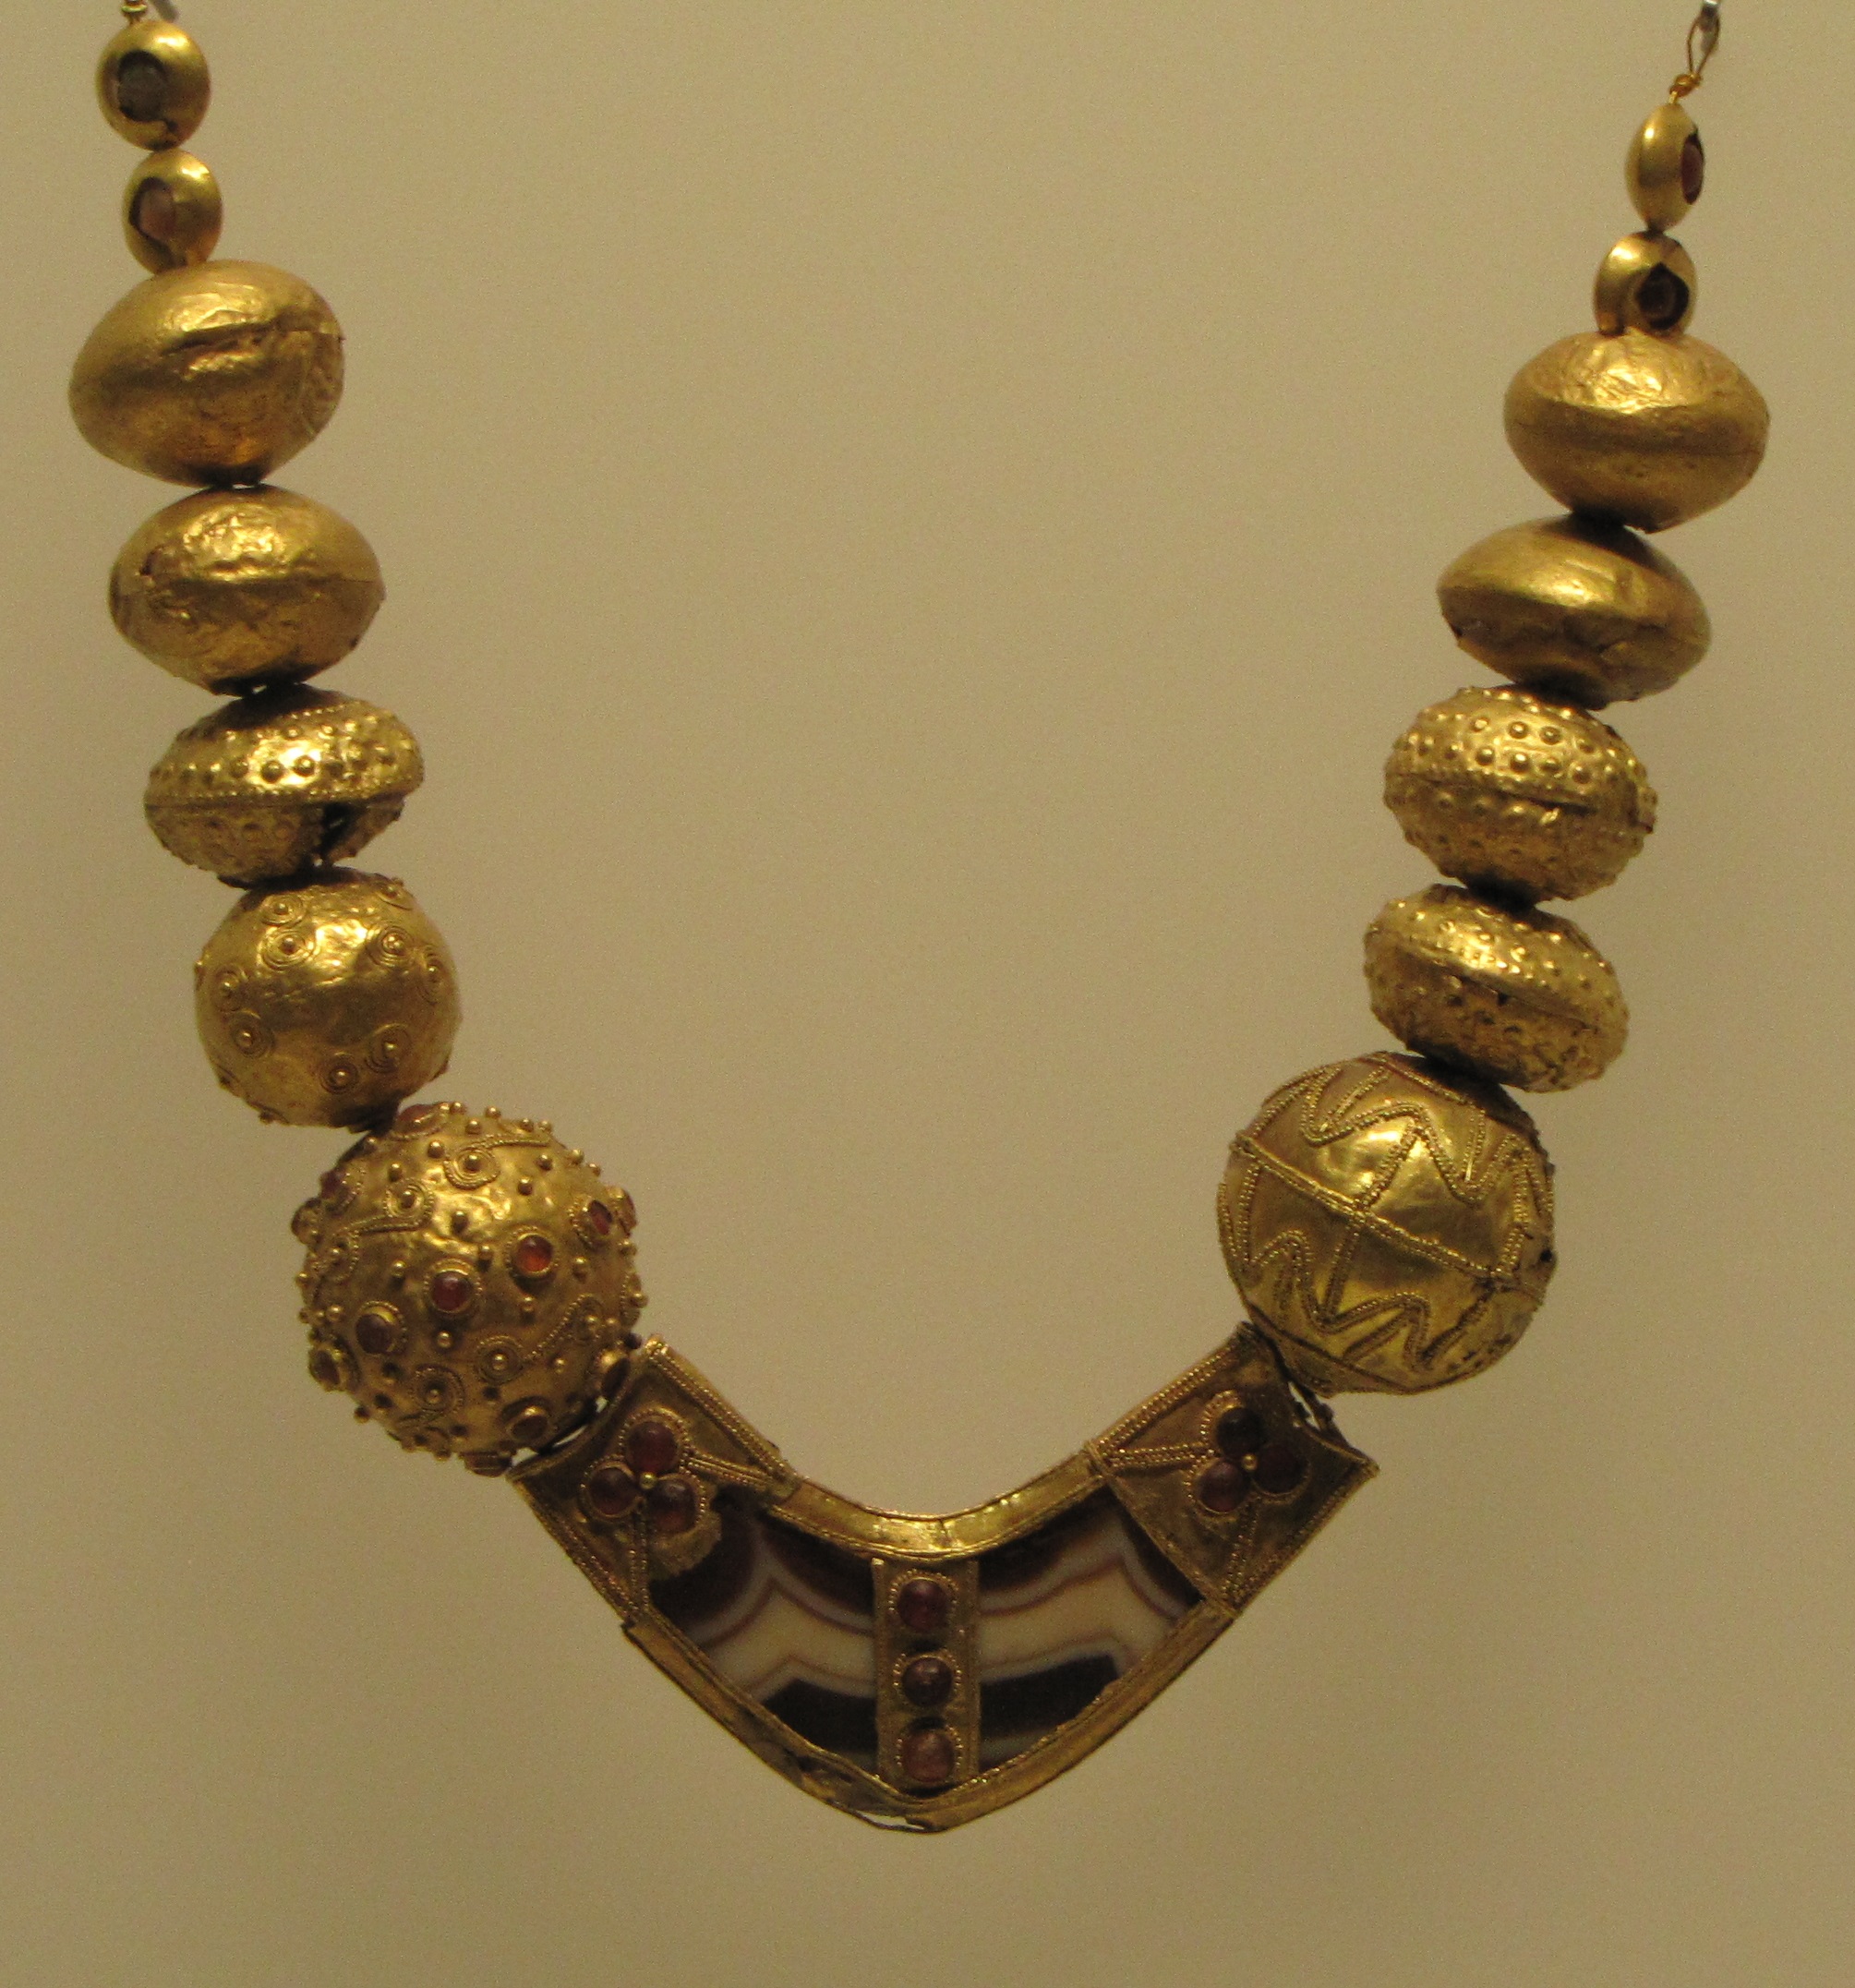 https://upload.wikimedia.org/wikipedia/commons/b/b2/trialeti_gold,_agate_and_cornelian_necklace.jpg